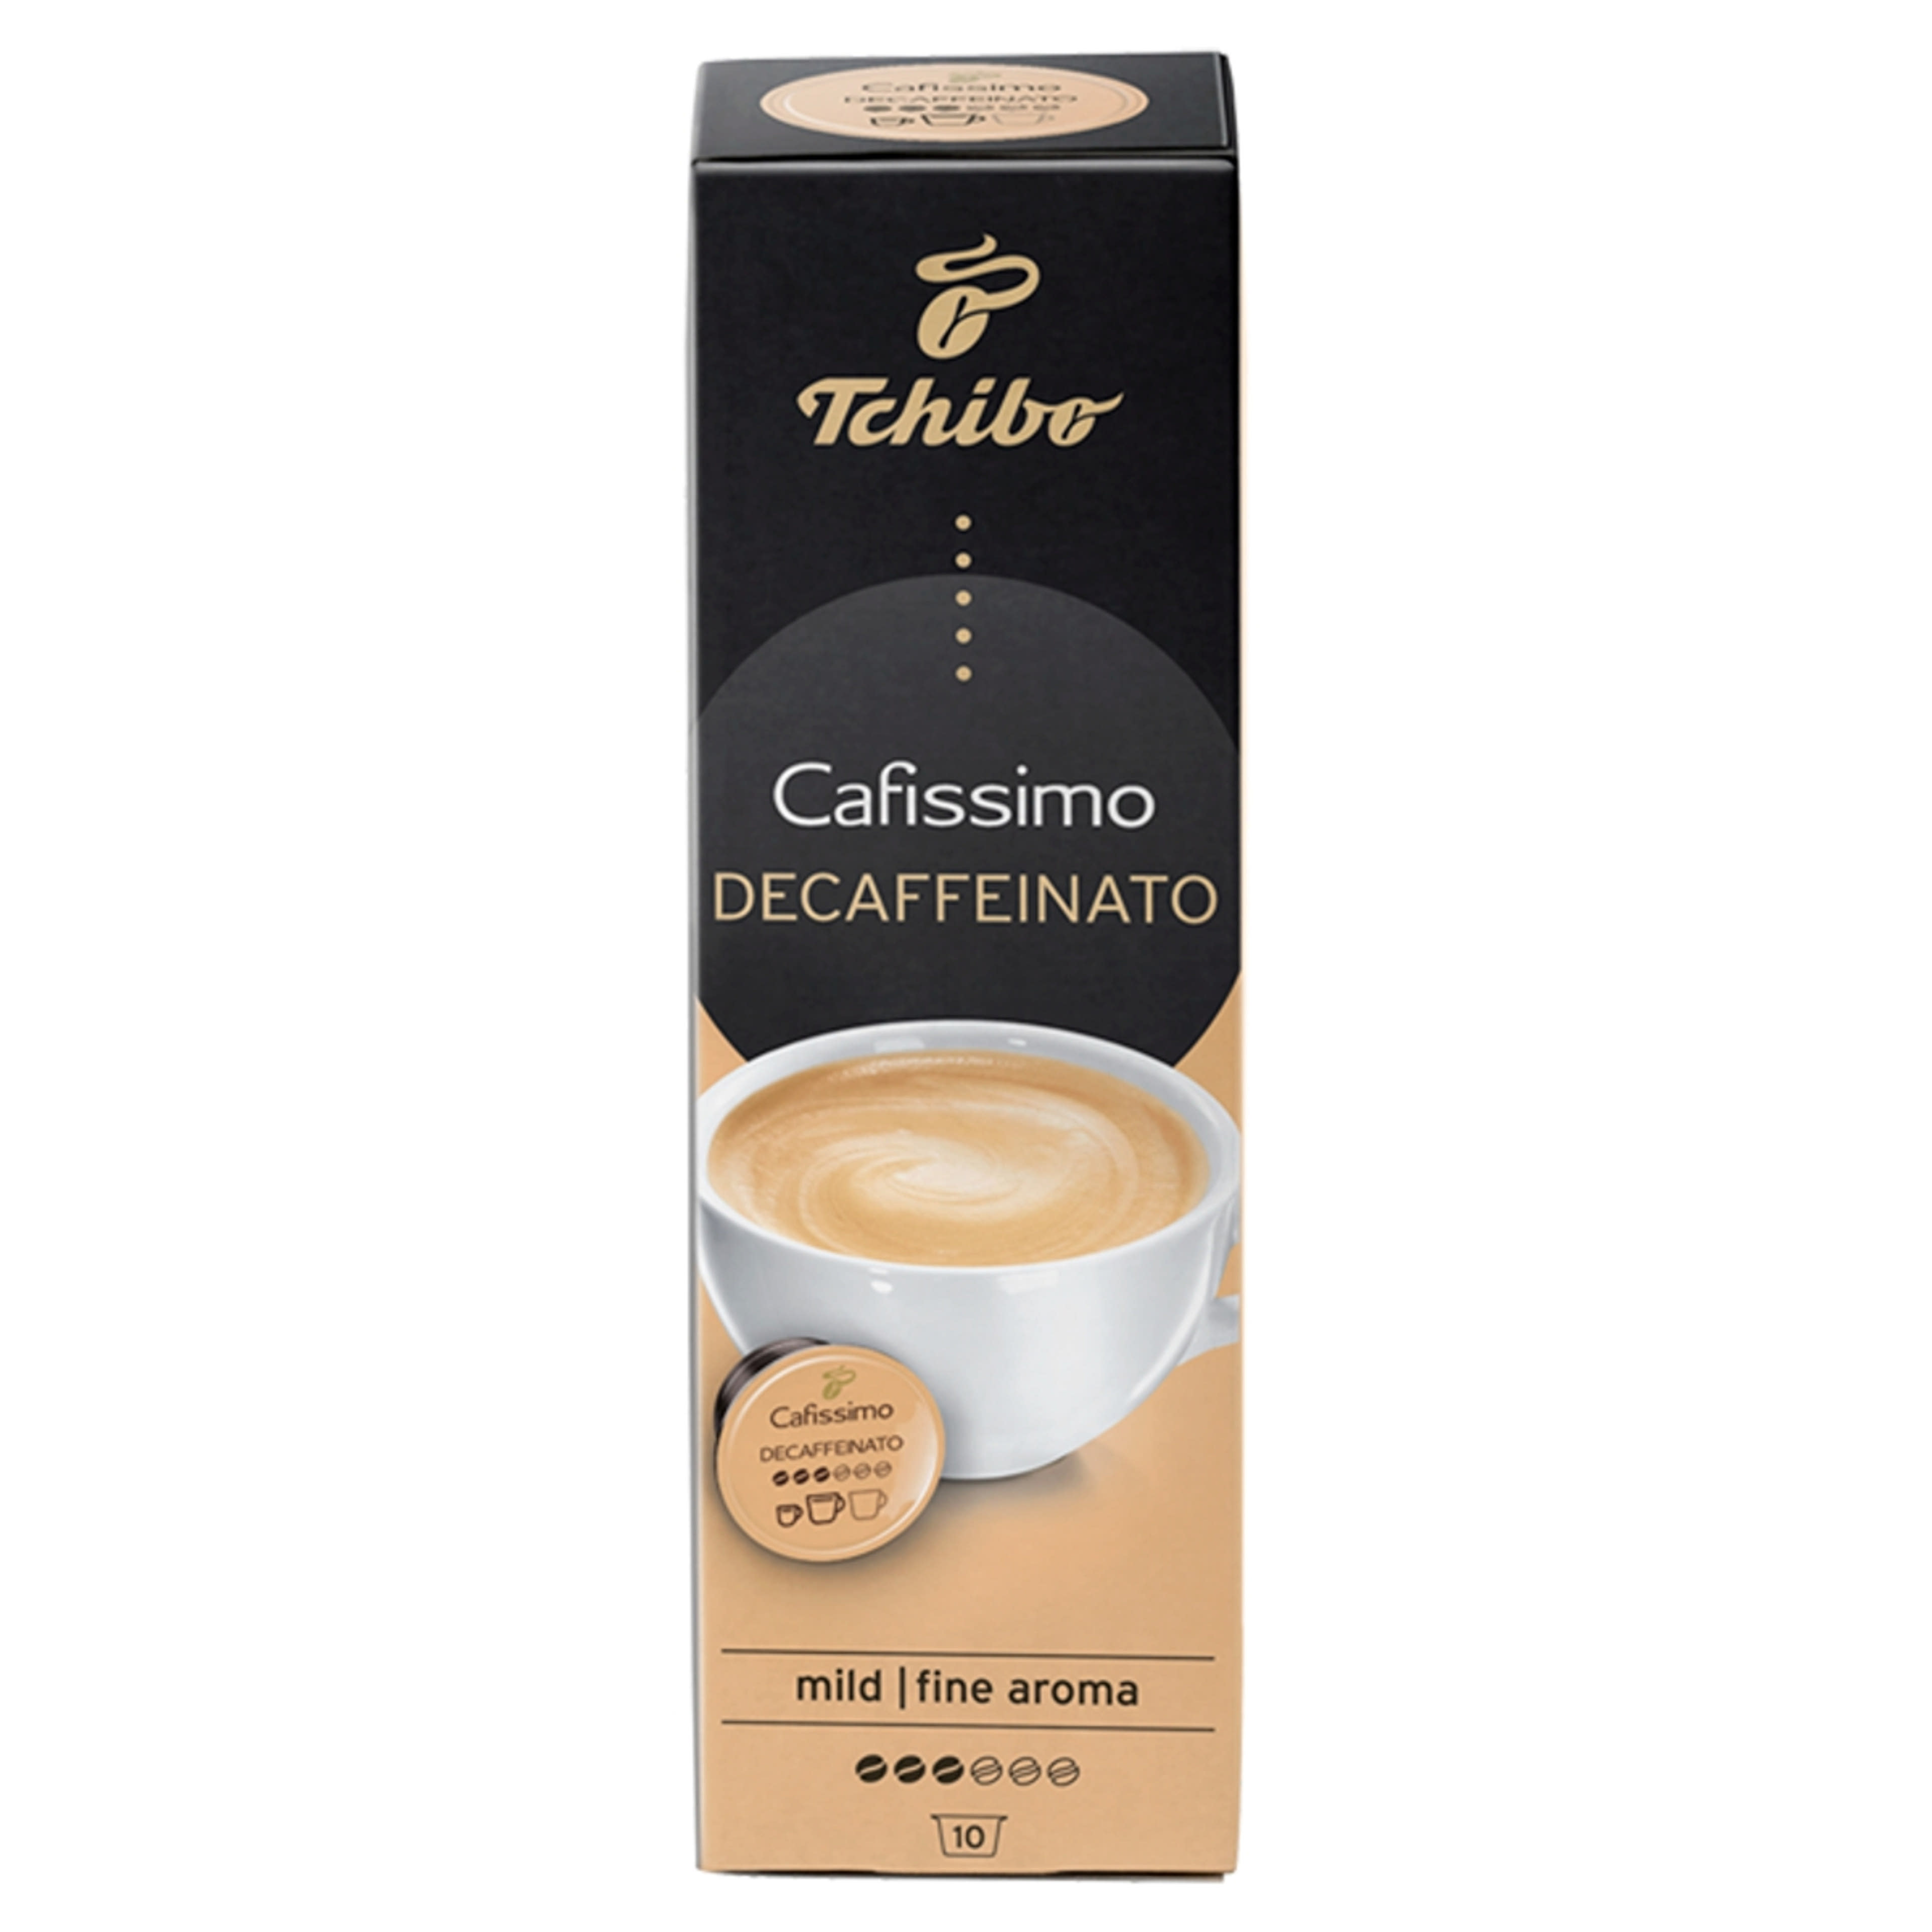 Tchibo Caffe Crema Decaffeinated Cafissimo kávékapszula - 10 db